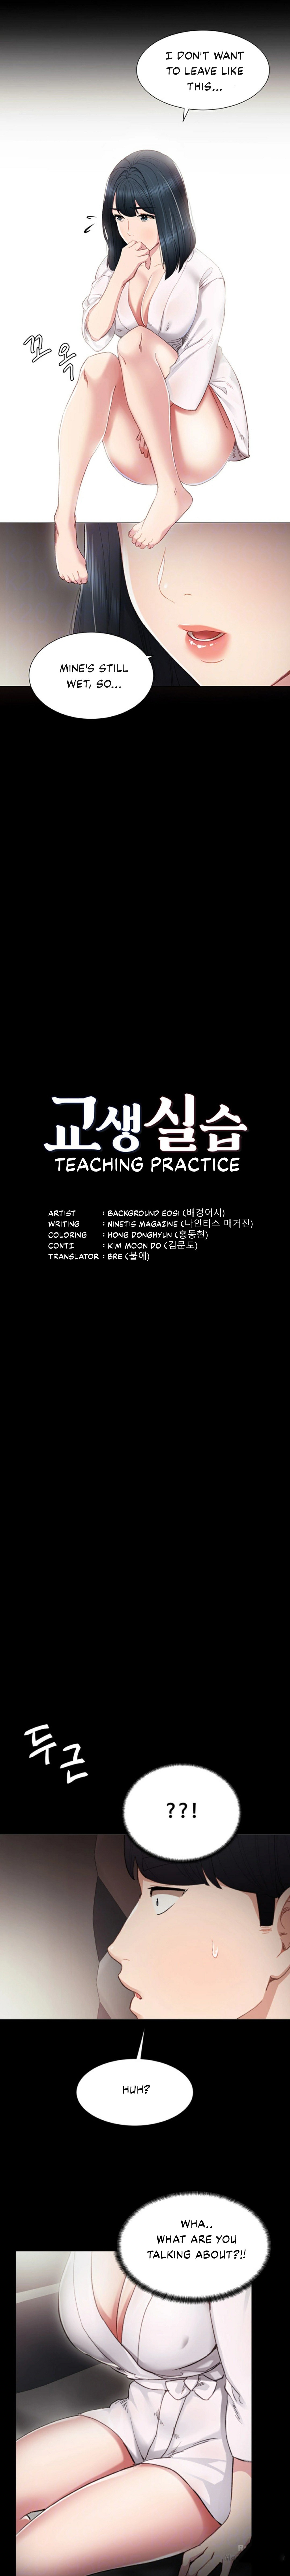 teaching-practice-chap-7-2